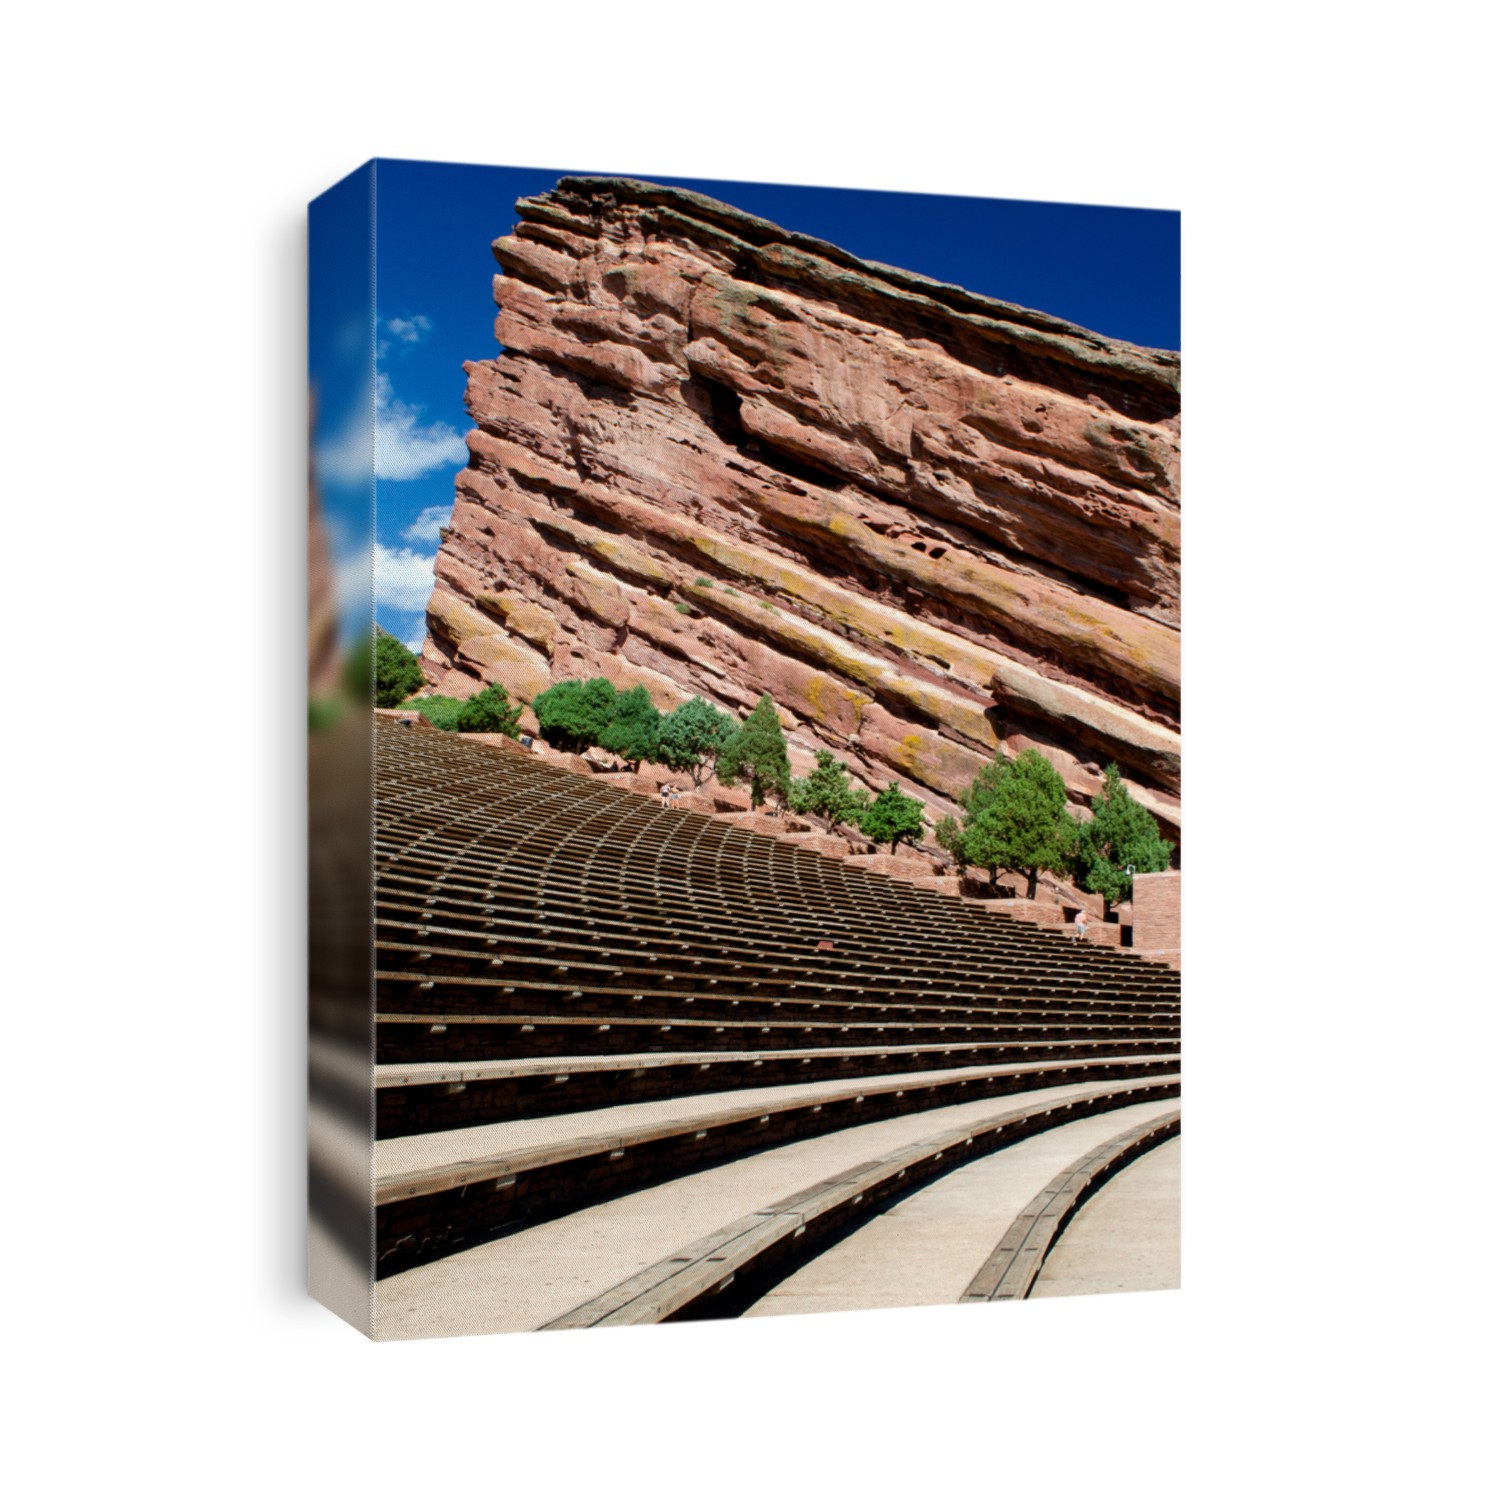 Red Rocks Amphitheater in Morrison, Colorado 